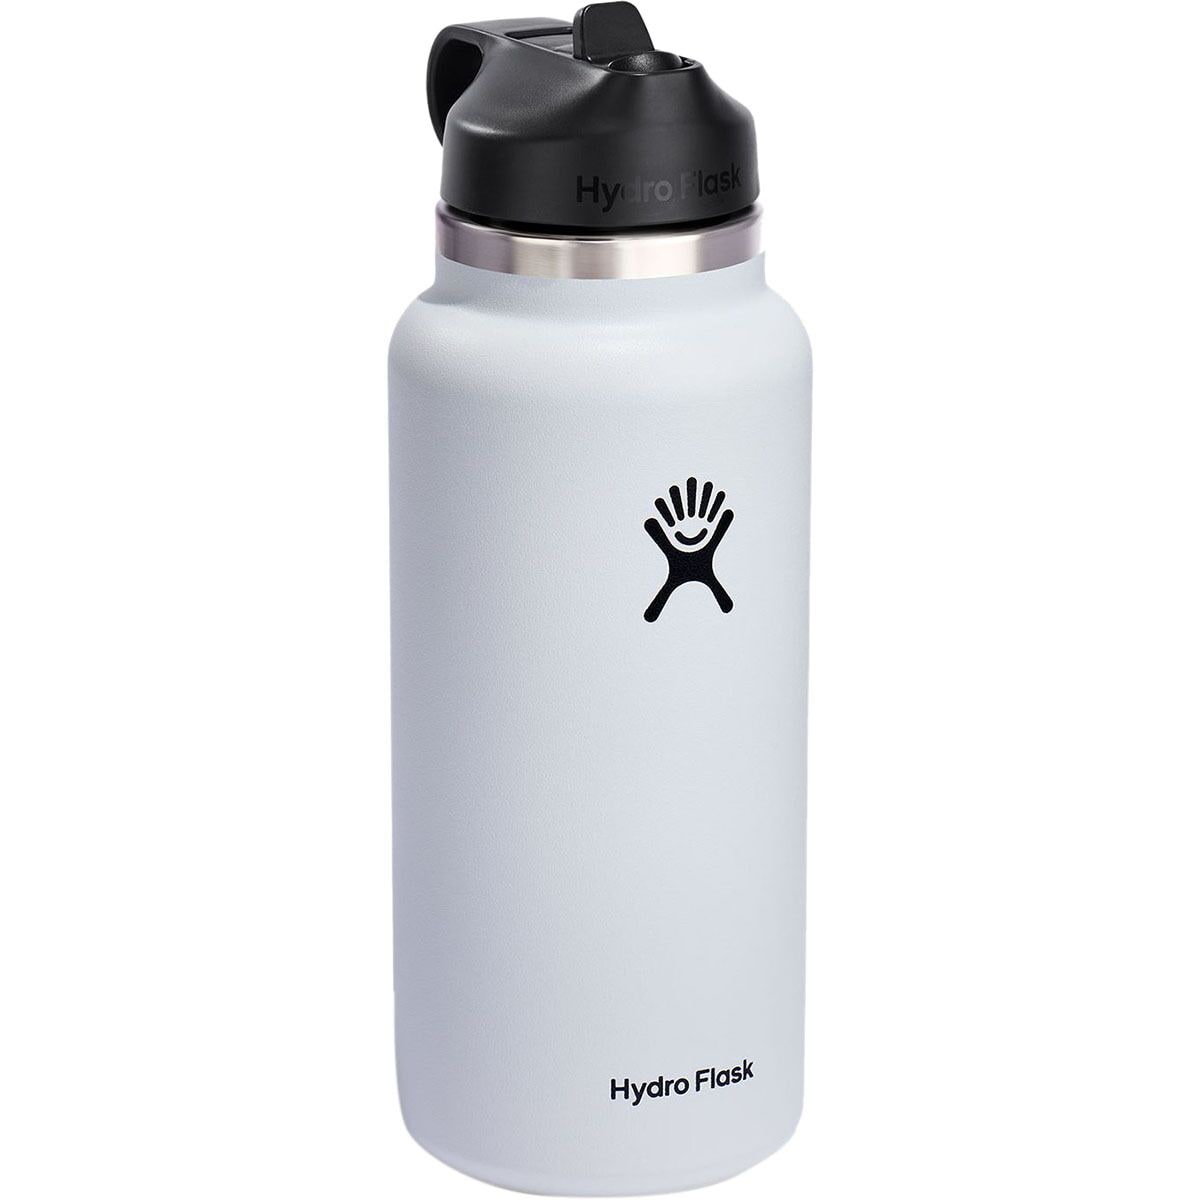 Hydro Flask 2.0 - 32oz with Straw Lid